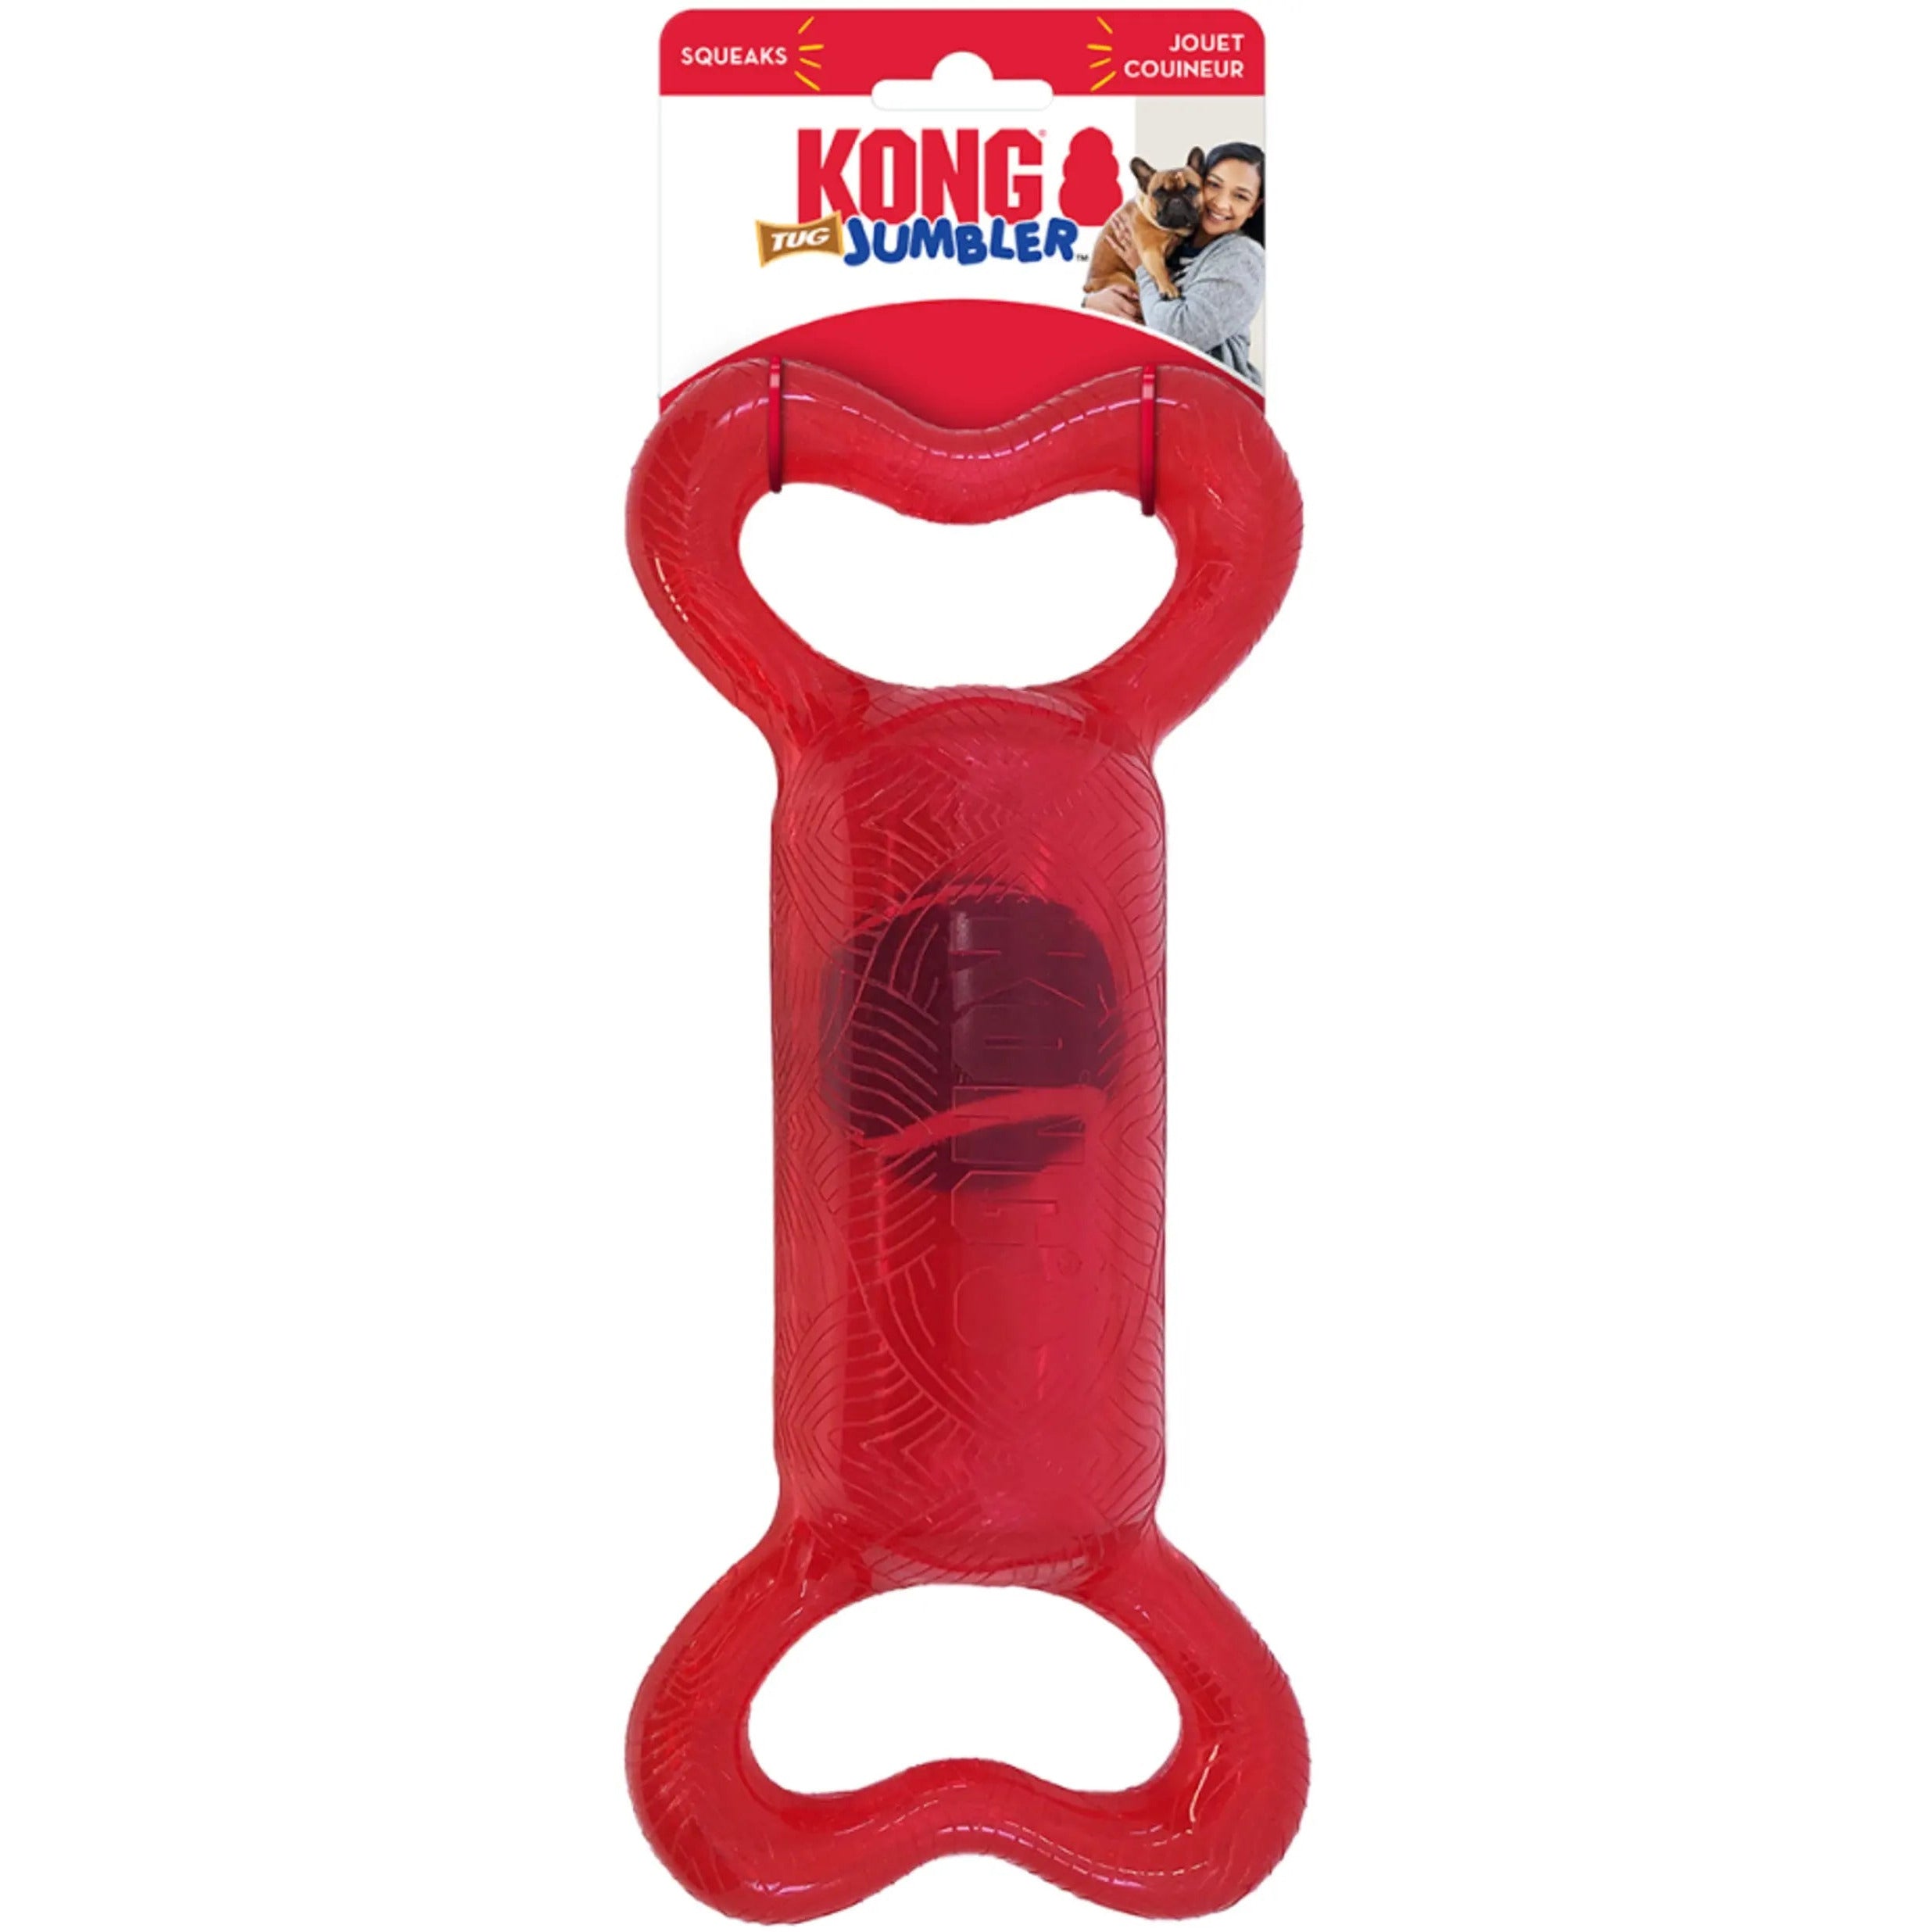 KONG Jumbler Tug Dog Toy KONG Jumbler Tug Dog Toy Assorted